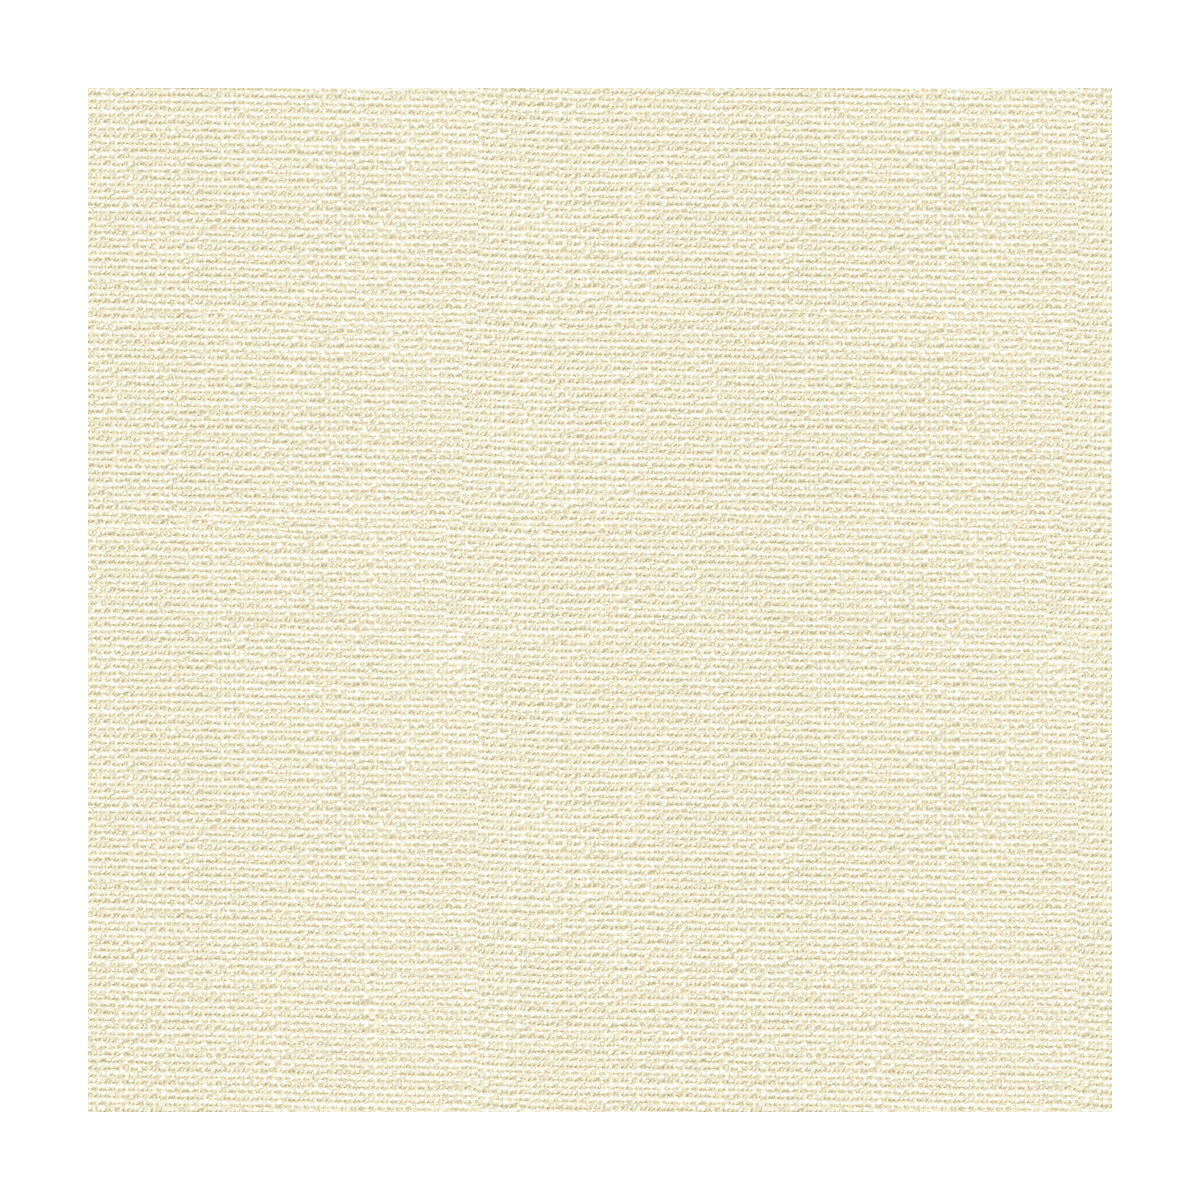 Kravet Smart fabric in 31682-101 color - pattern 31682.101.0 - by Kravet Smart